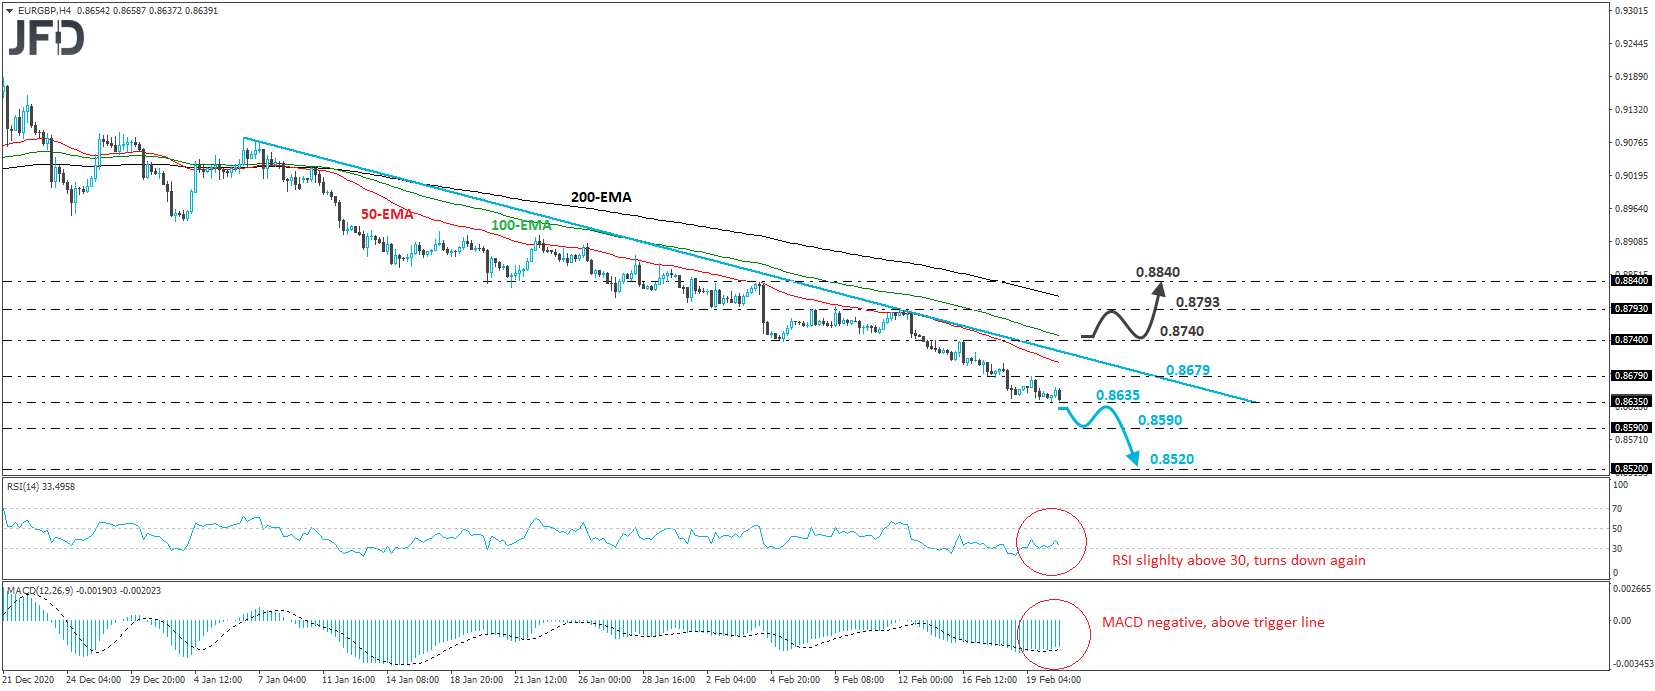 EUR/GBP 4-hour chart technical analysis